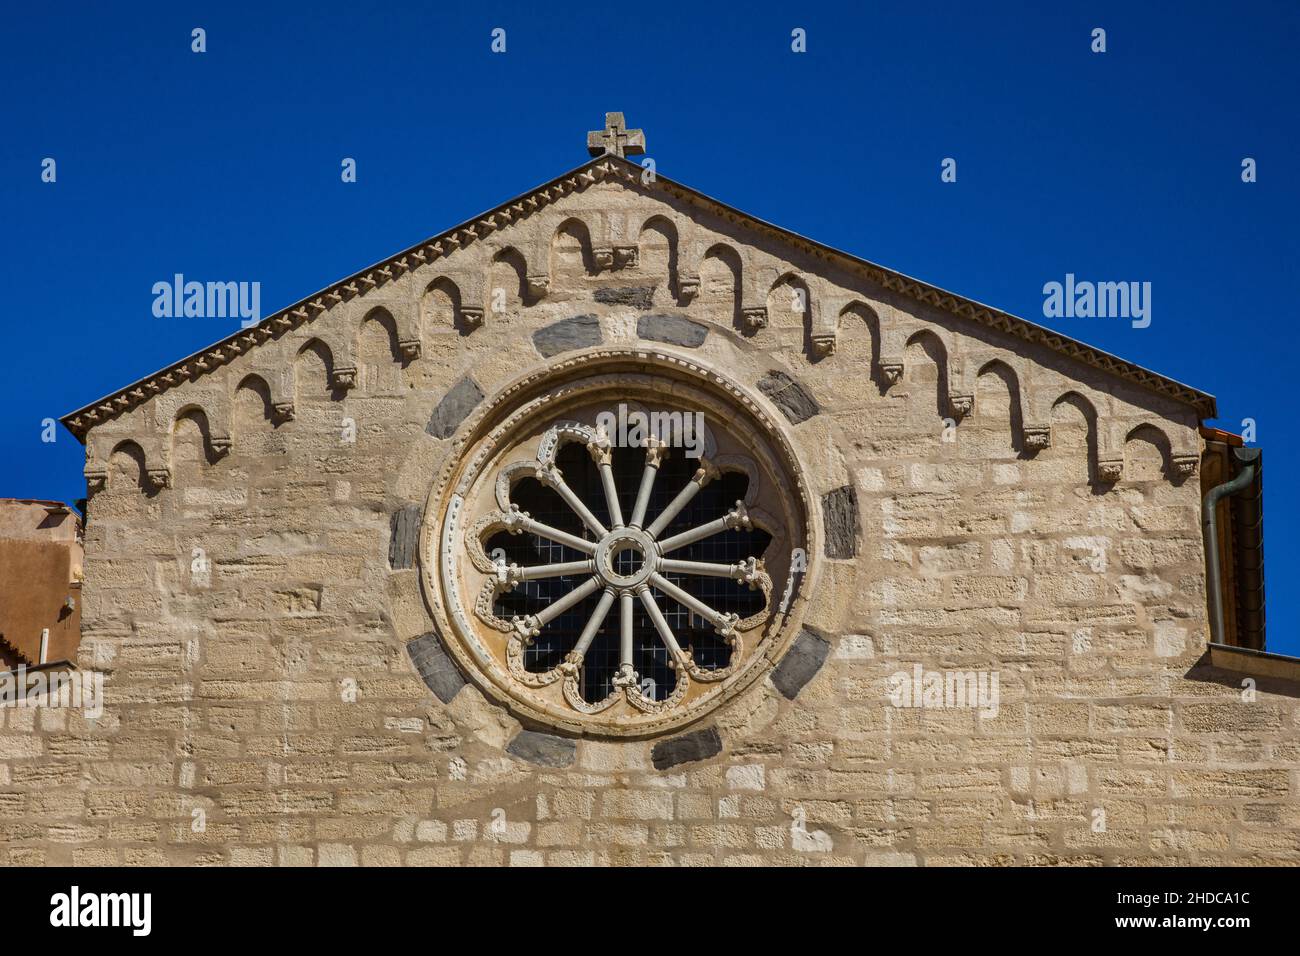 Saint-Marie-Majeure, Old Town, Ville Haute, Bonifacio, Corsica, Bonifacio, Corsica, France, Europe Stock Photo